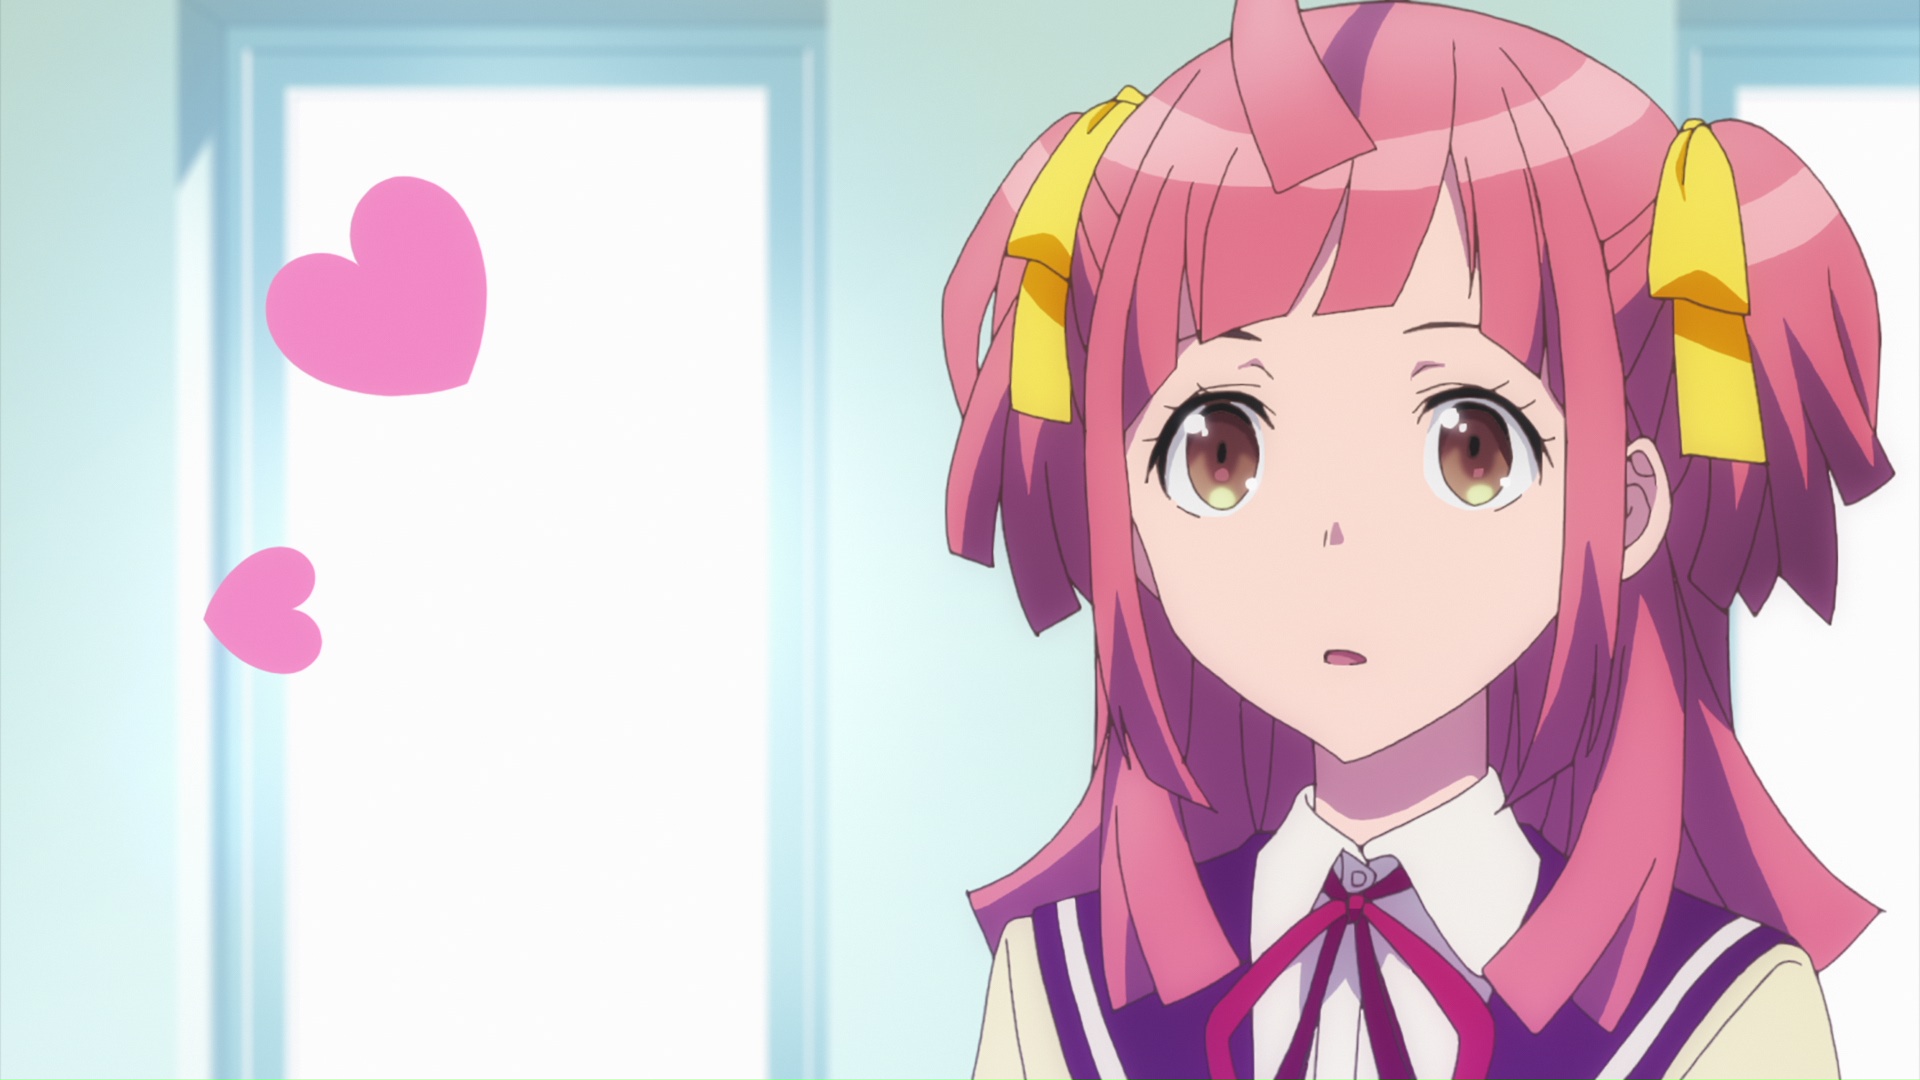 Watch Anime Gataris Season 1 Episode 11 Sub Dub Anime Simulcast